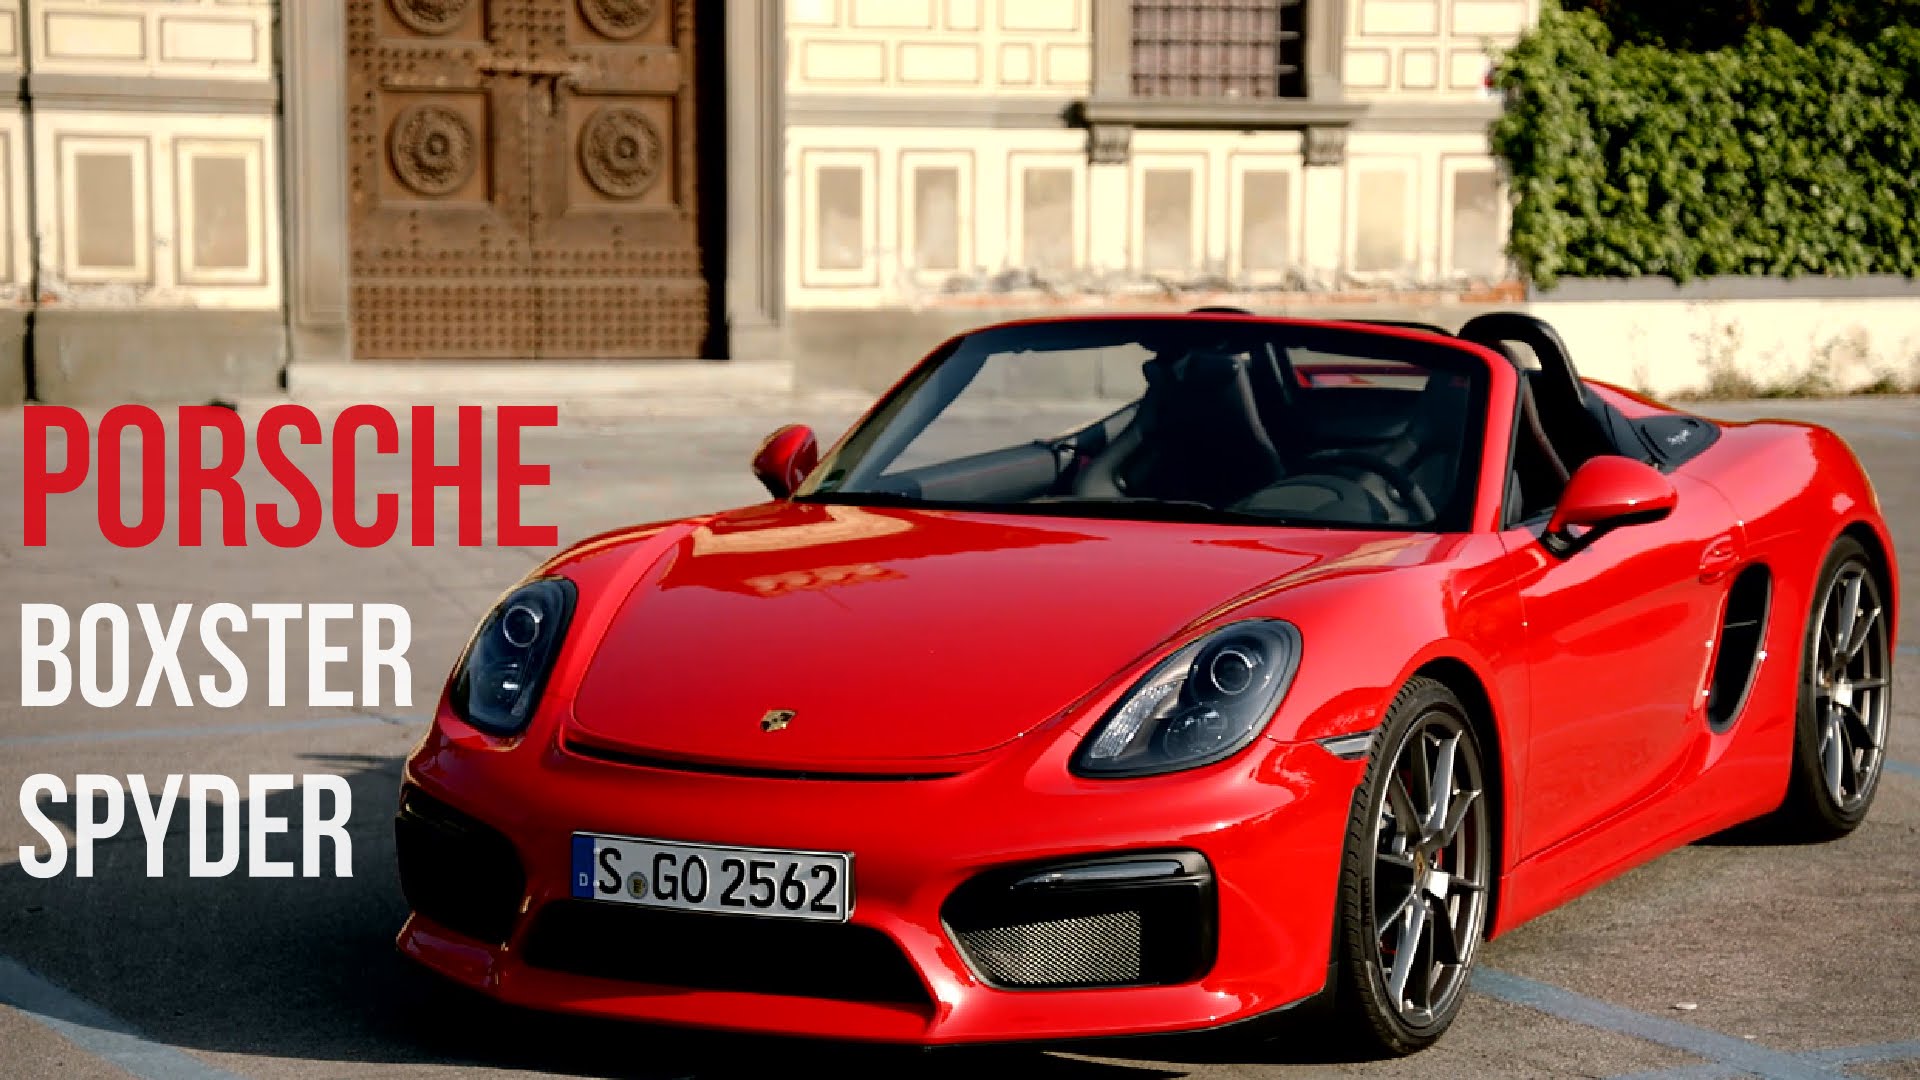 Images of Red Porsche | 1920x1080